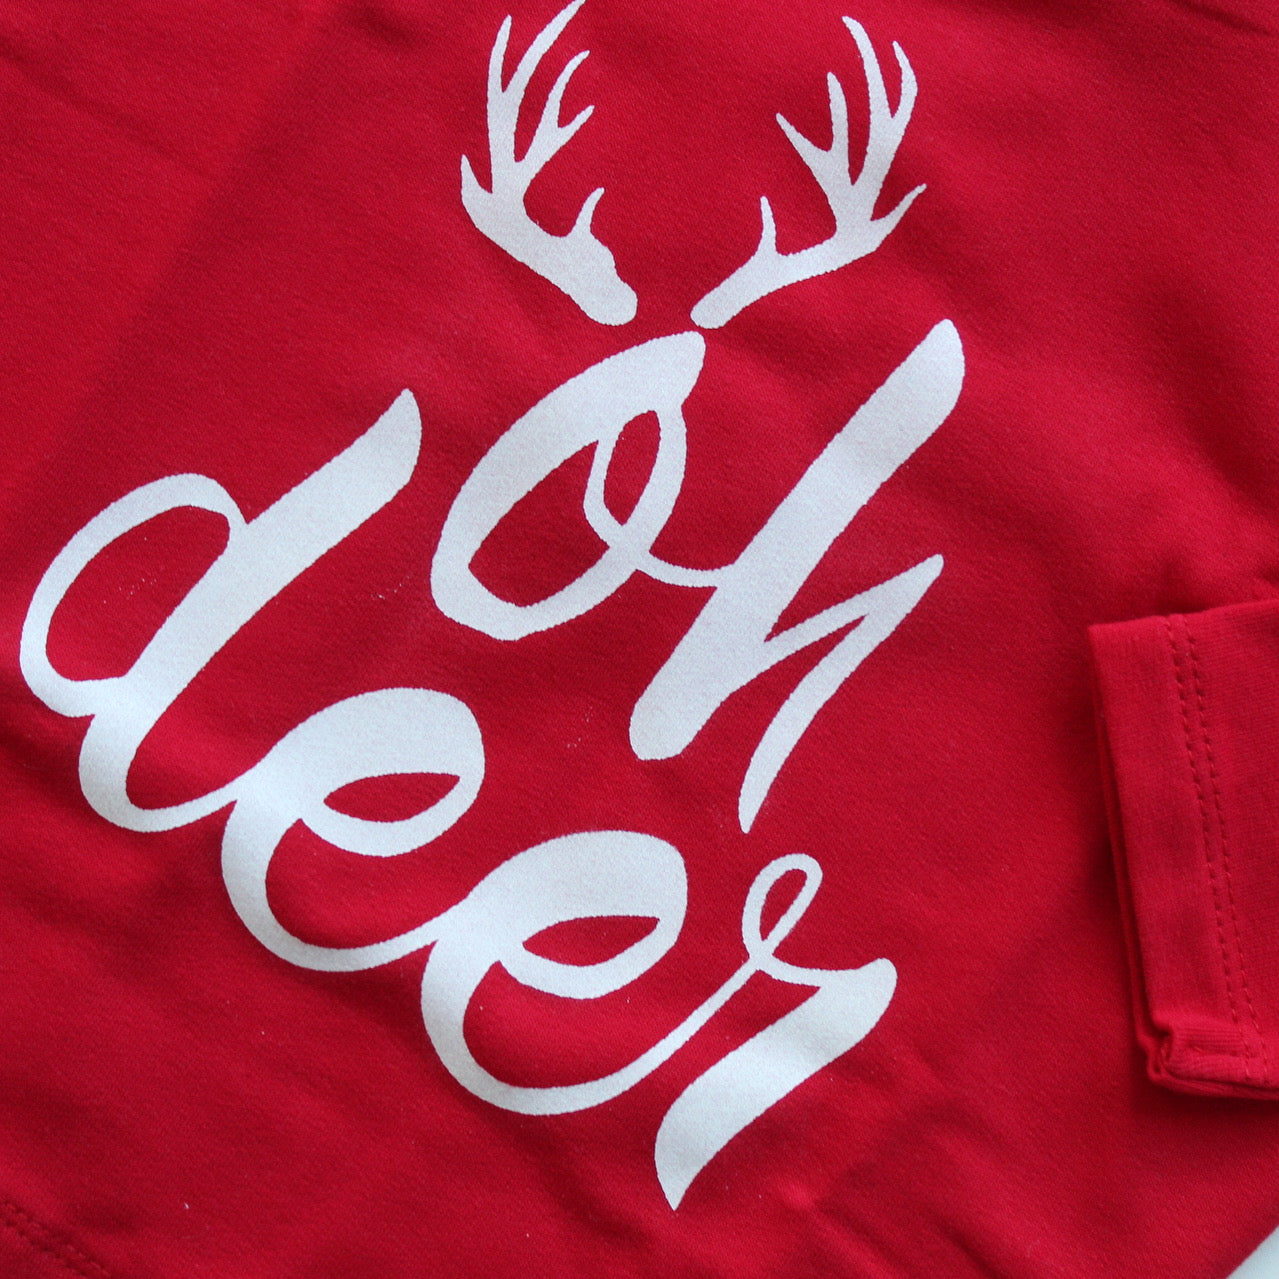 Oh Deer bomull sweatshirt, rød, strl.62-128